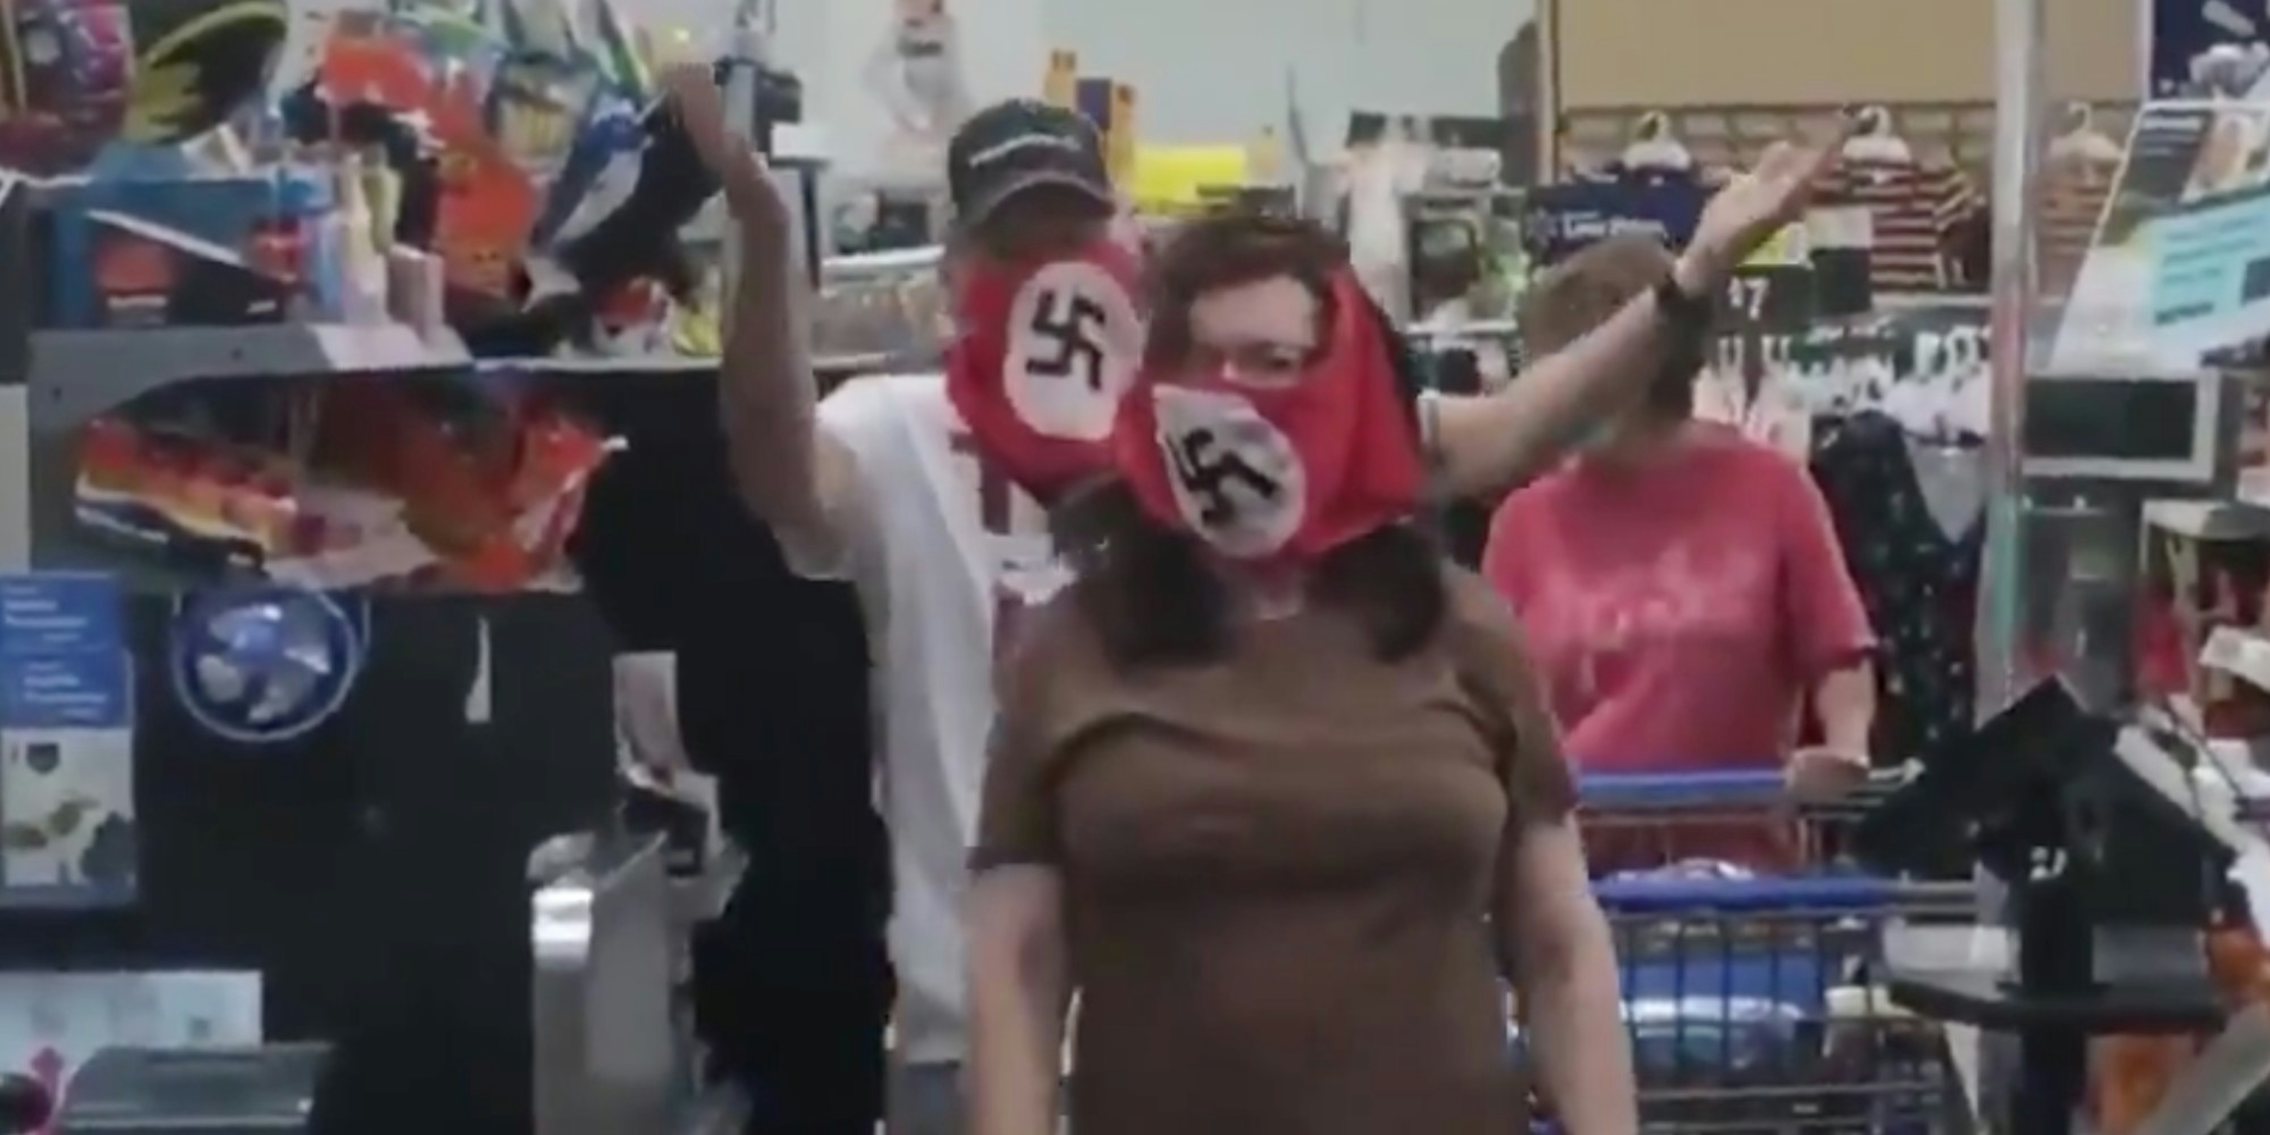 Two Trump supporters in Walmart wearing Nazi masks